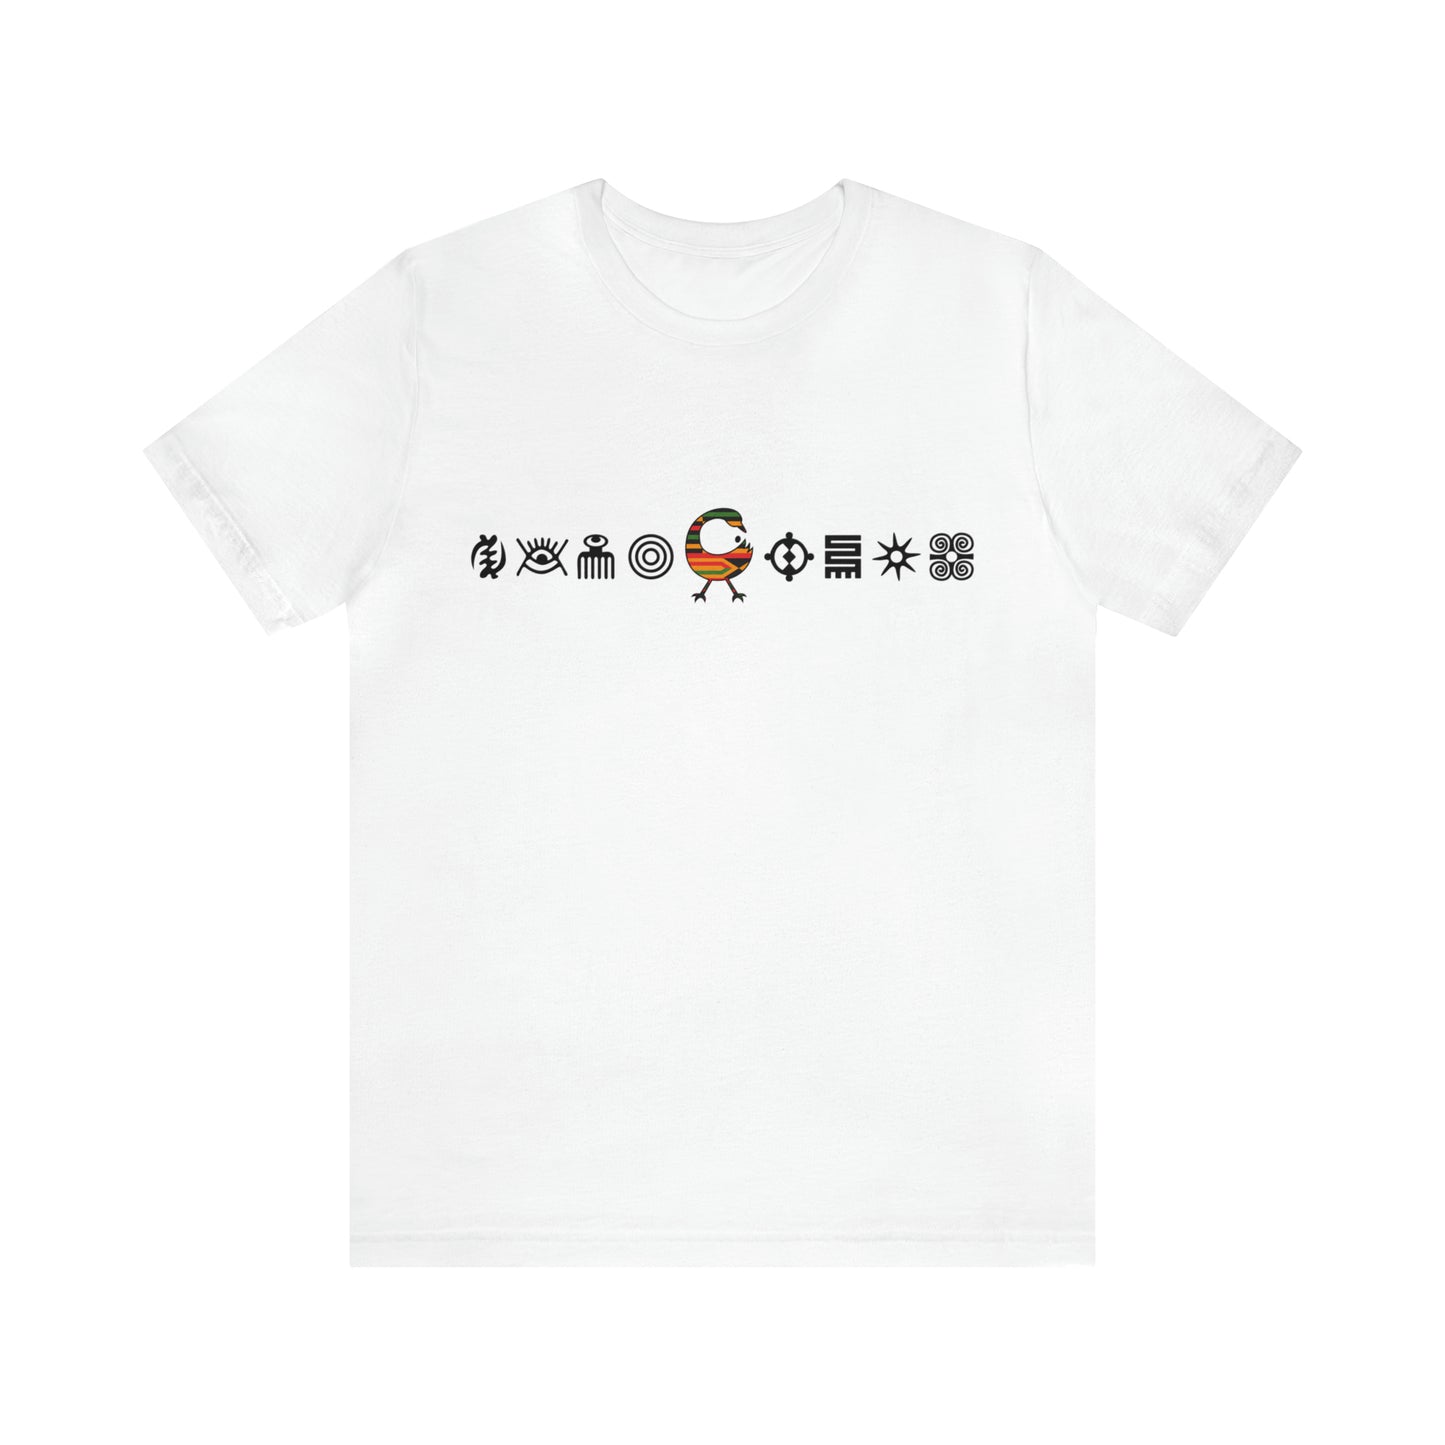 Adinkra Symbol T-shirt with Multiple Symbols in a Circular Pattern